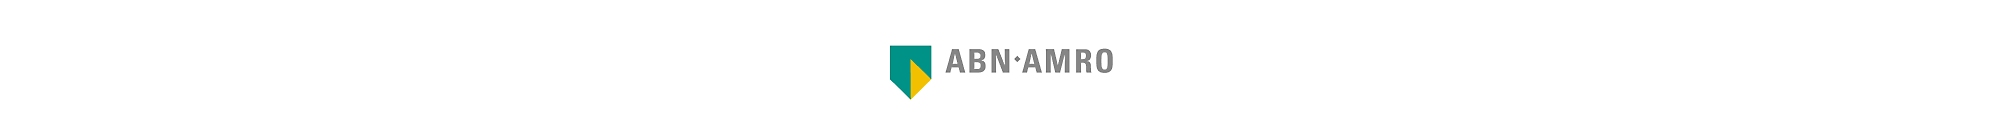 ABN AMRO 로고